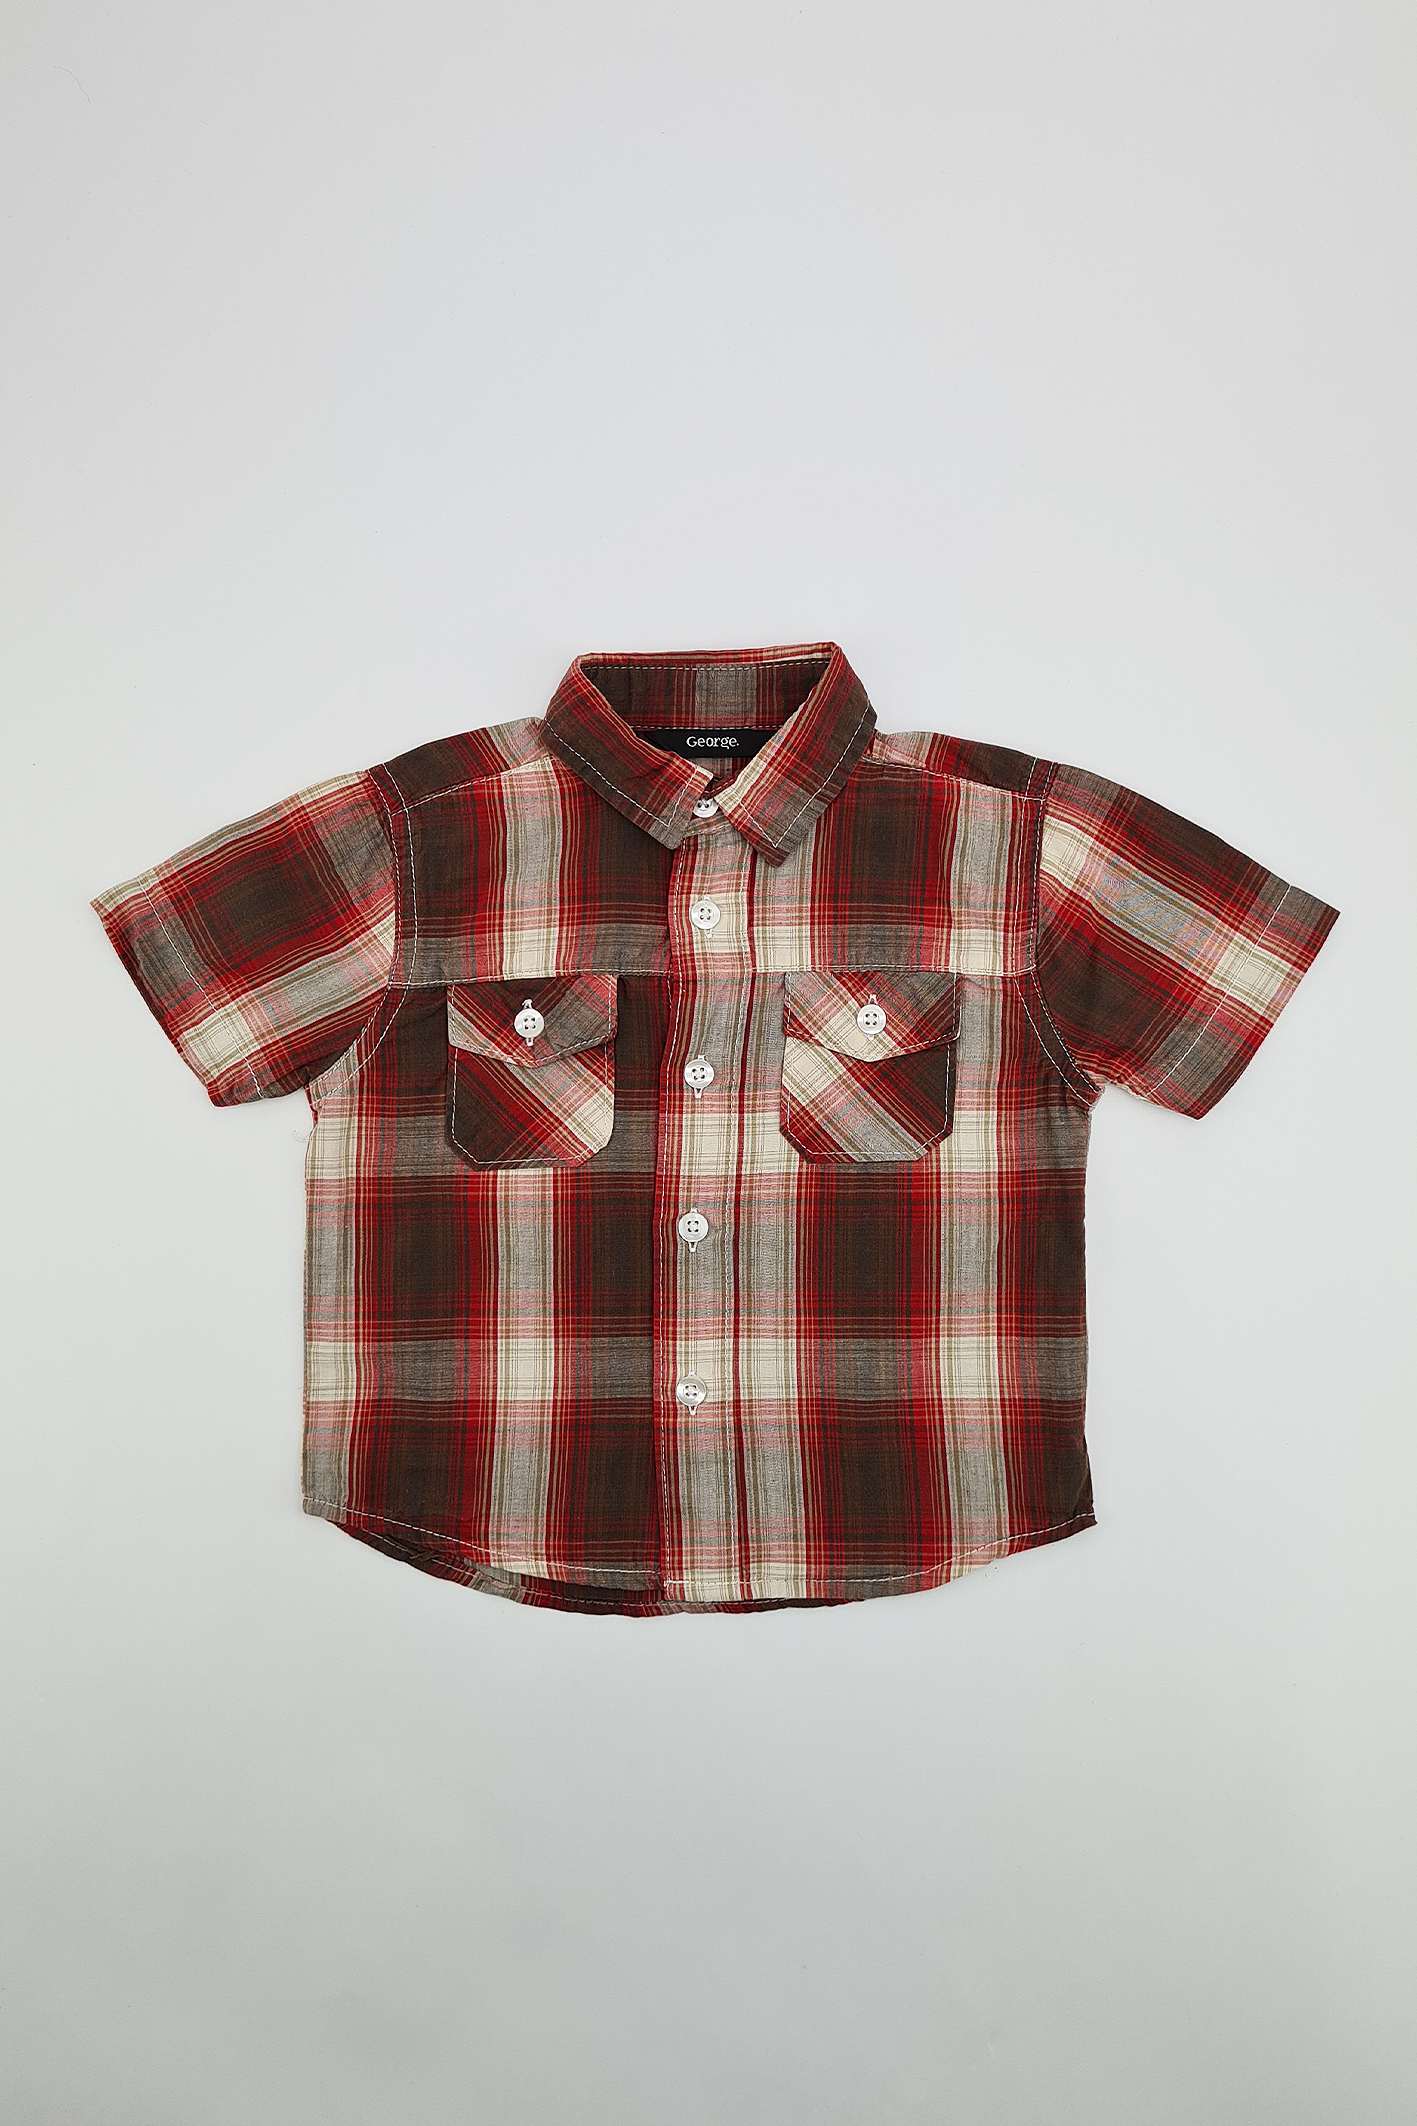 9-12m - Red checkered button-up shirt